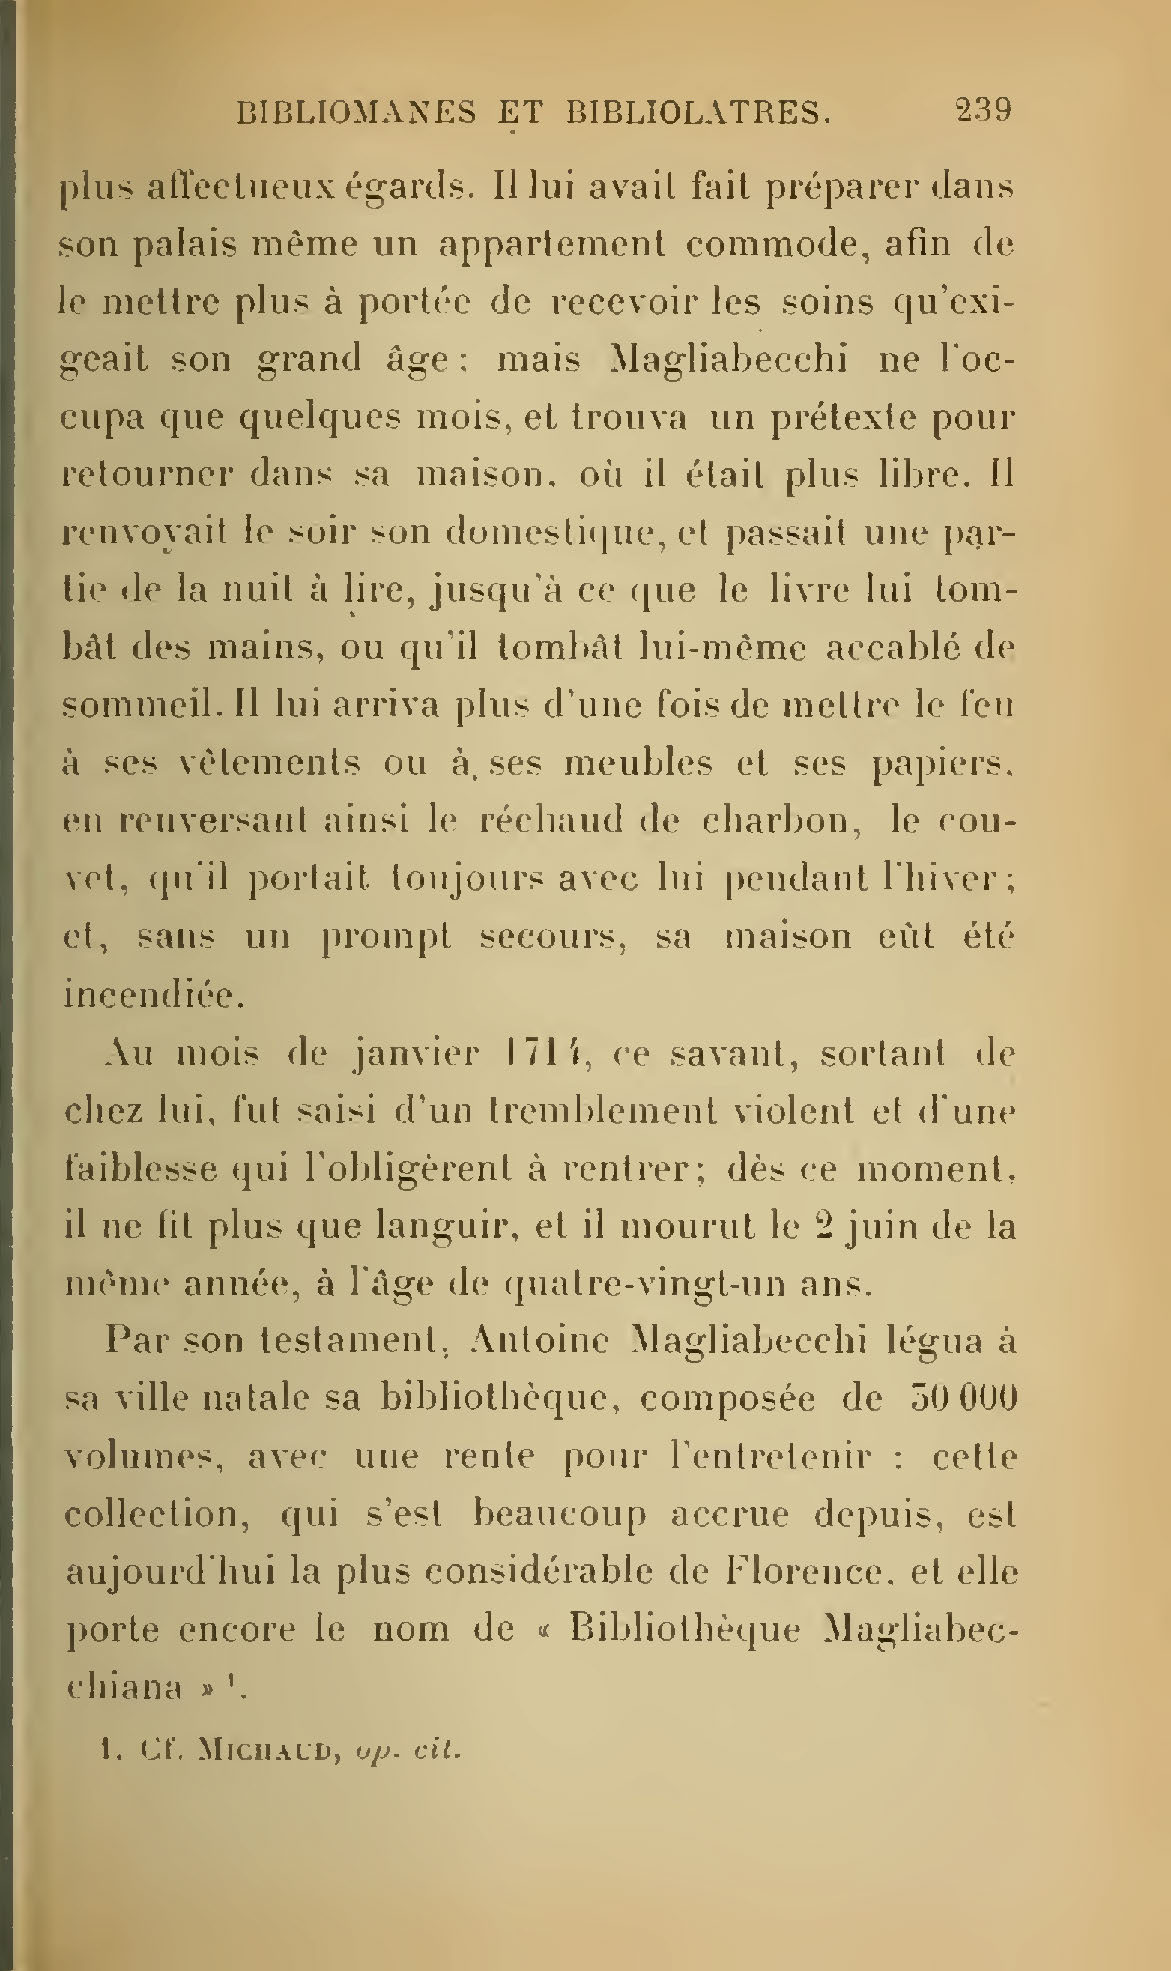 Albert Cim, Le Livre, t. II, p. 239.